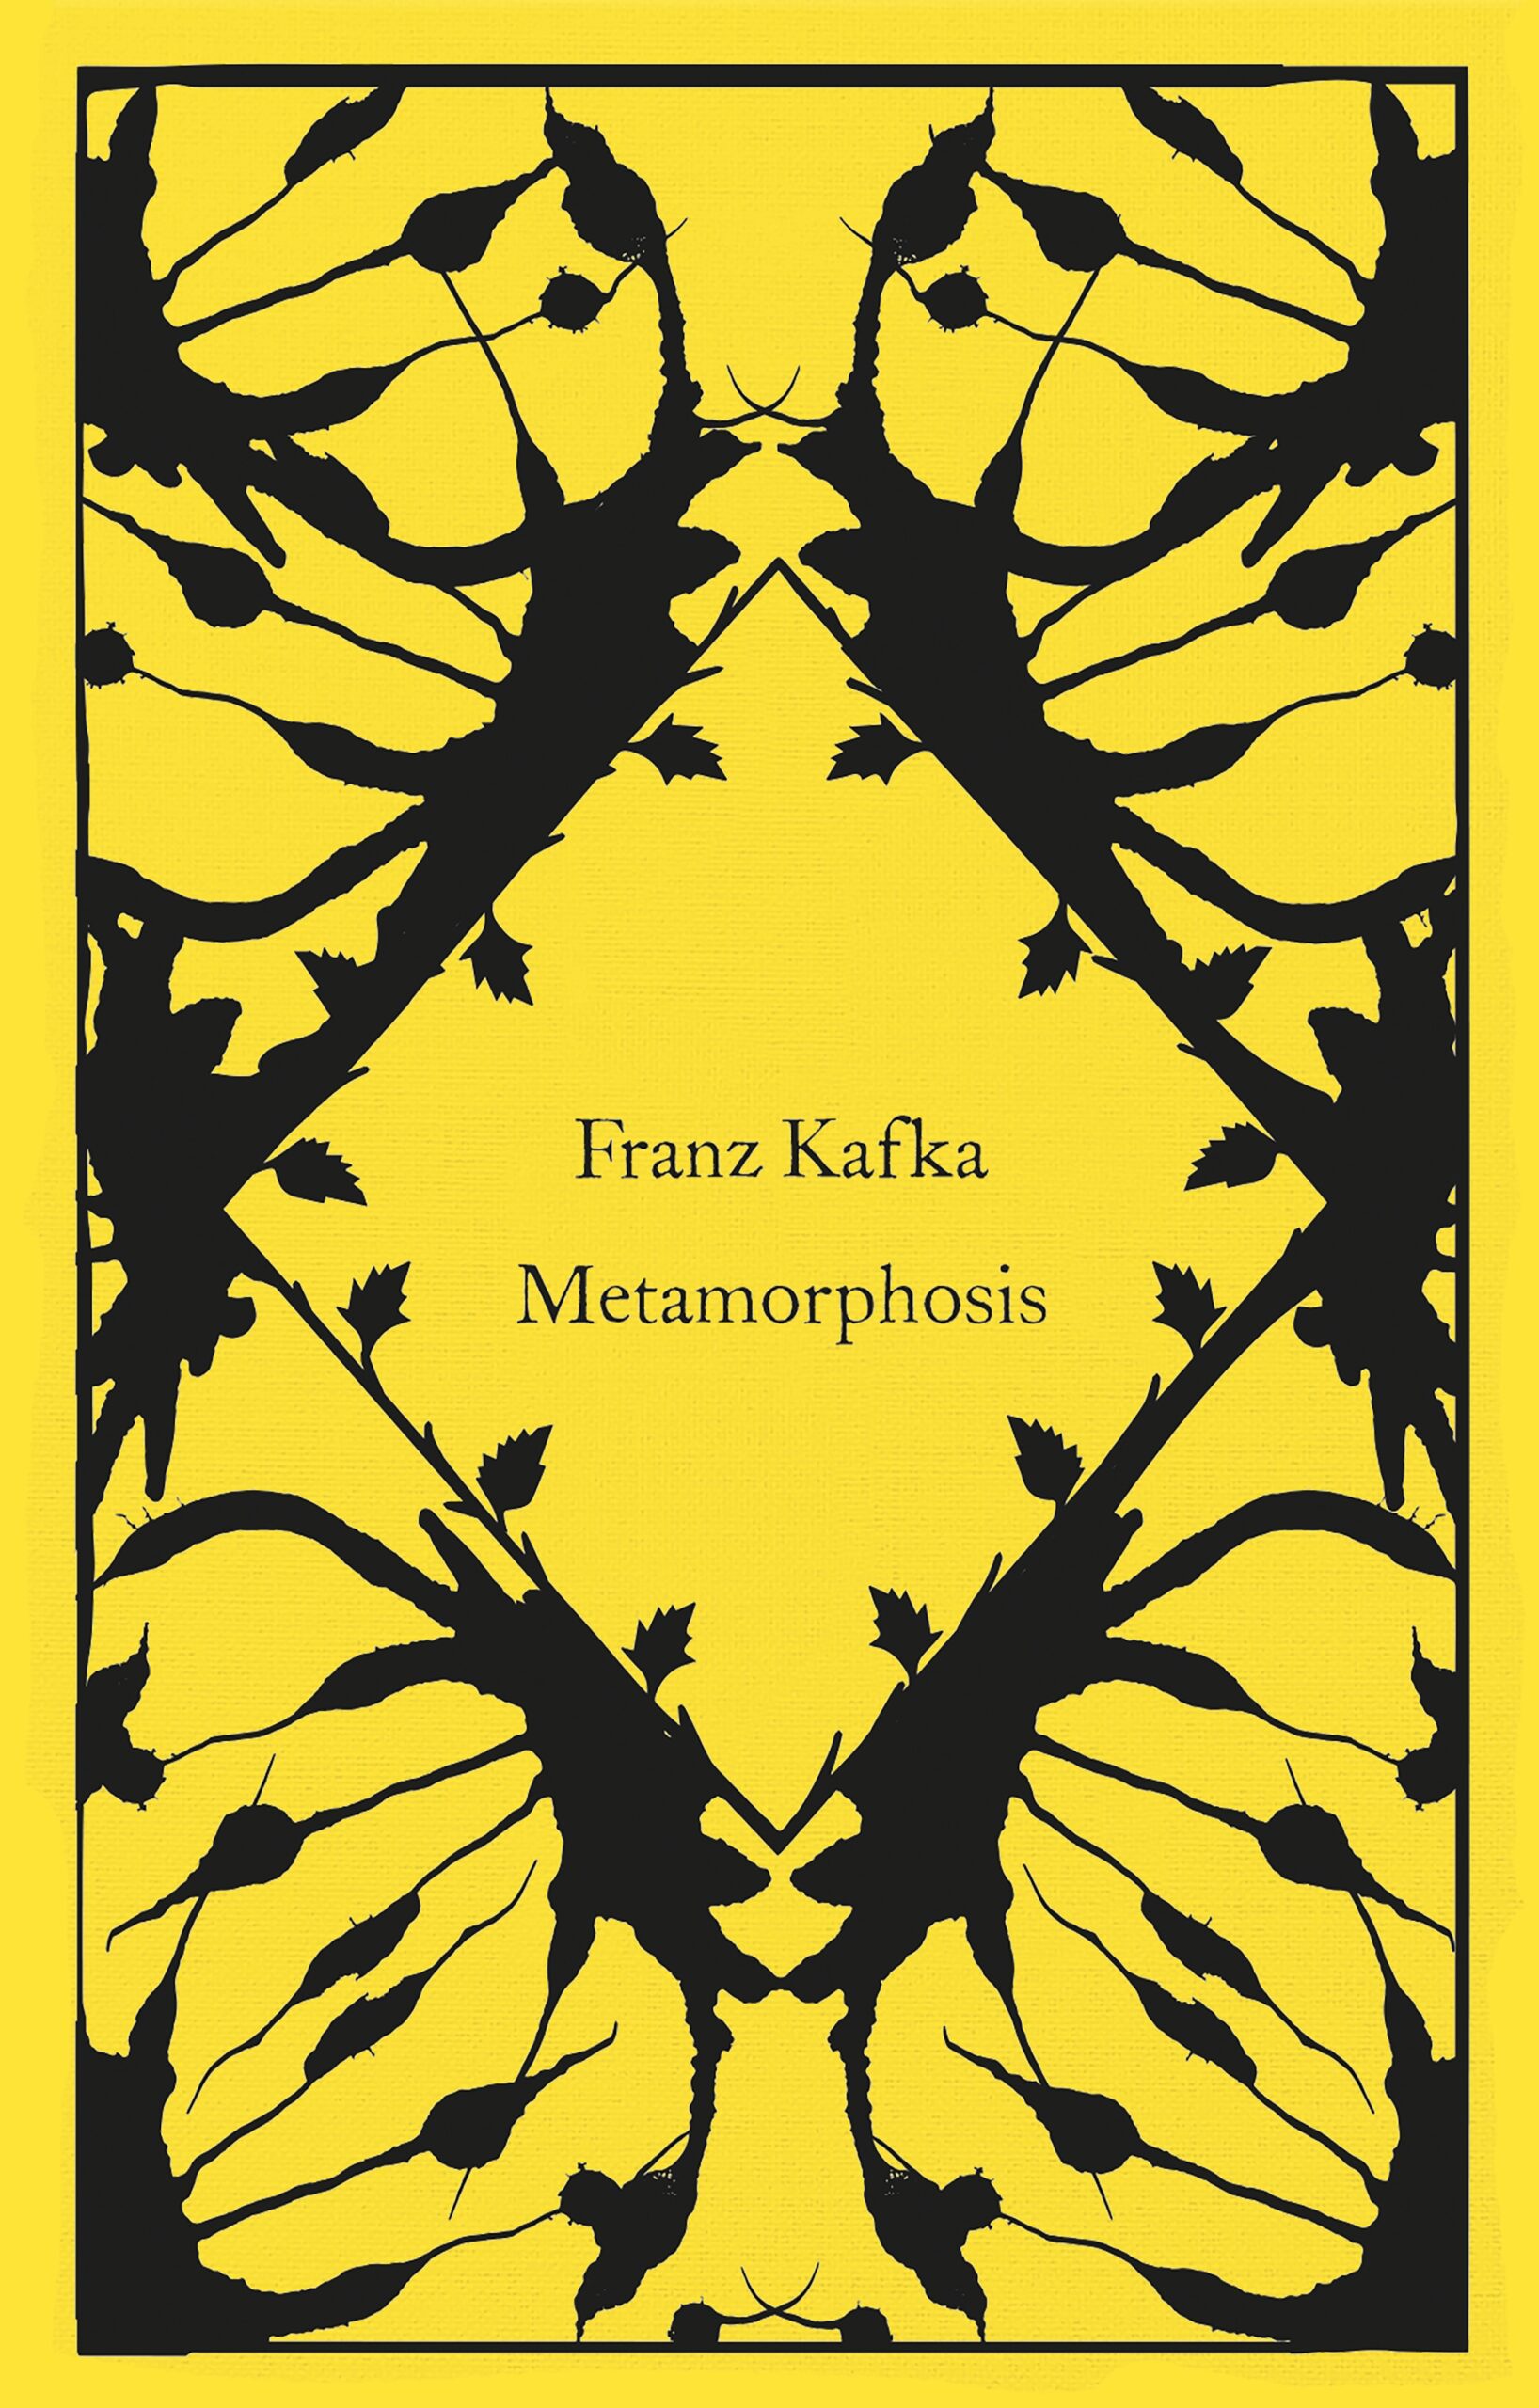 The Metamorphosis by Franz Kafka – Review